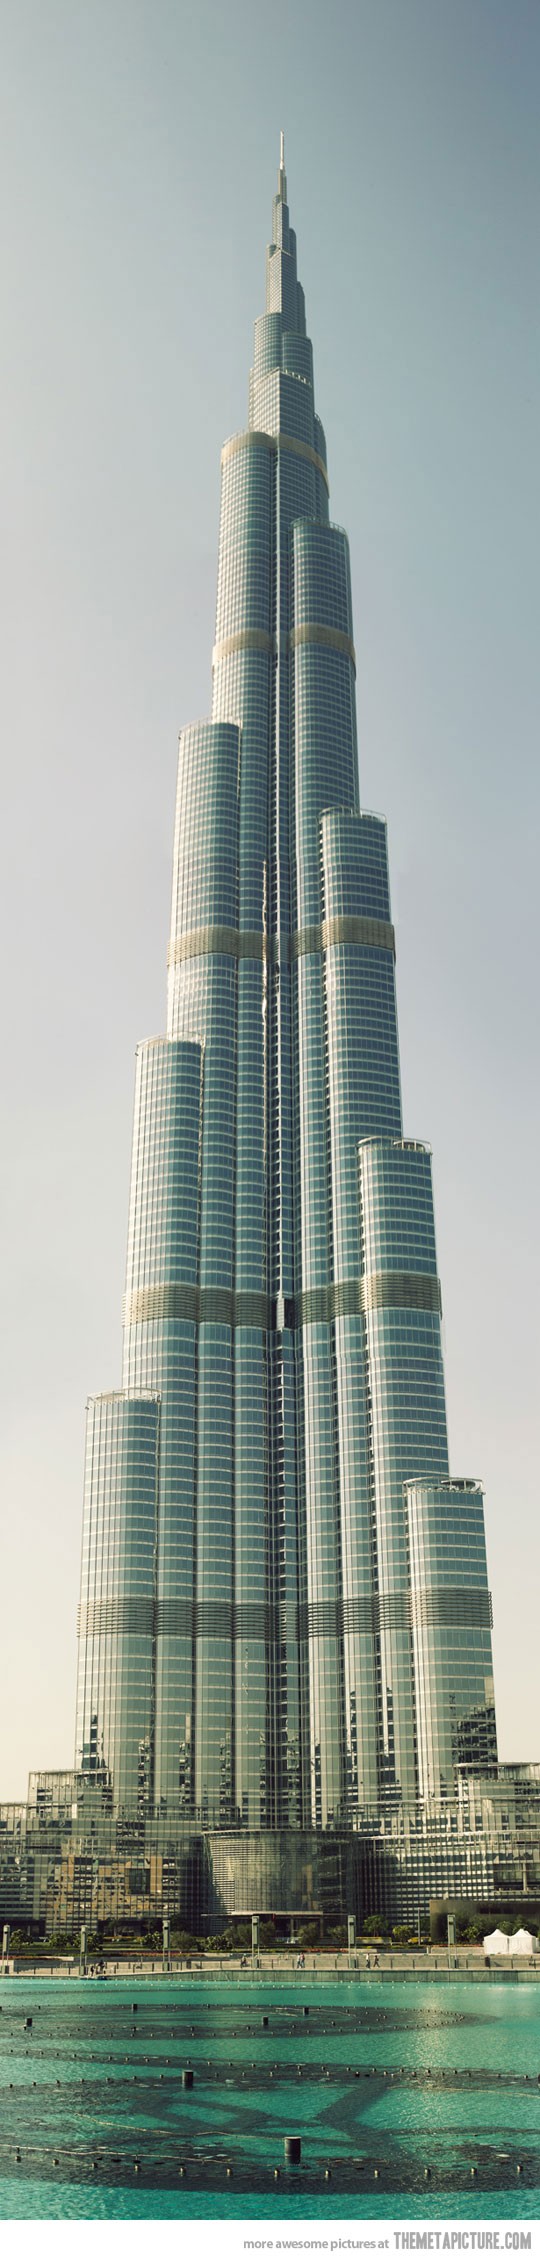 Photo:  Burj Khalifa The tallest building in the world